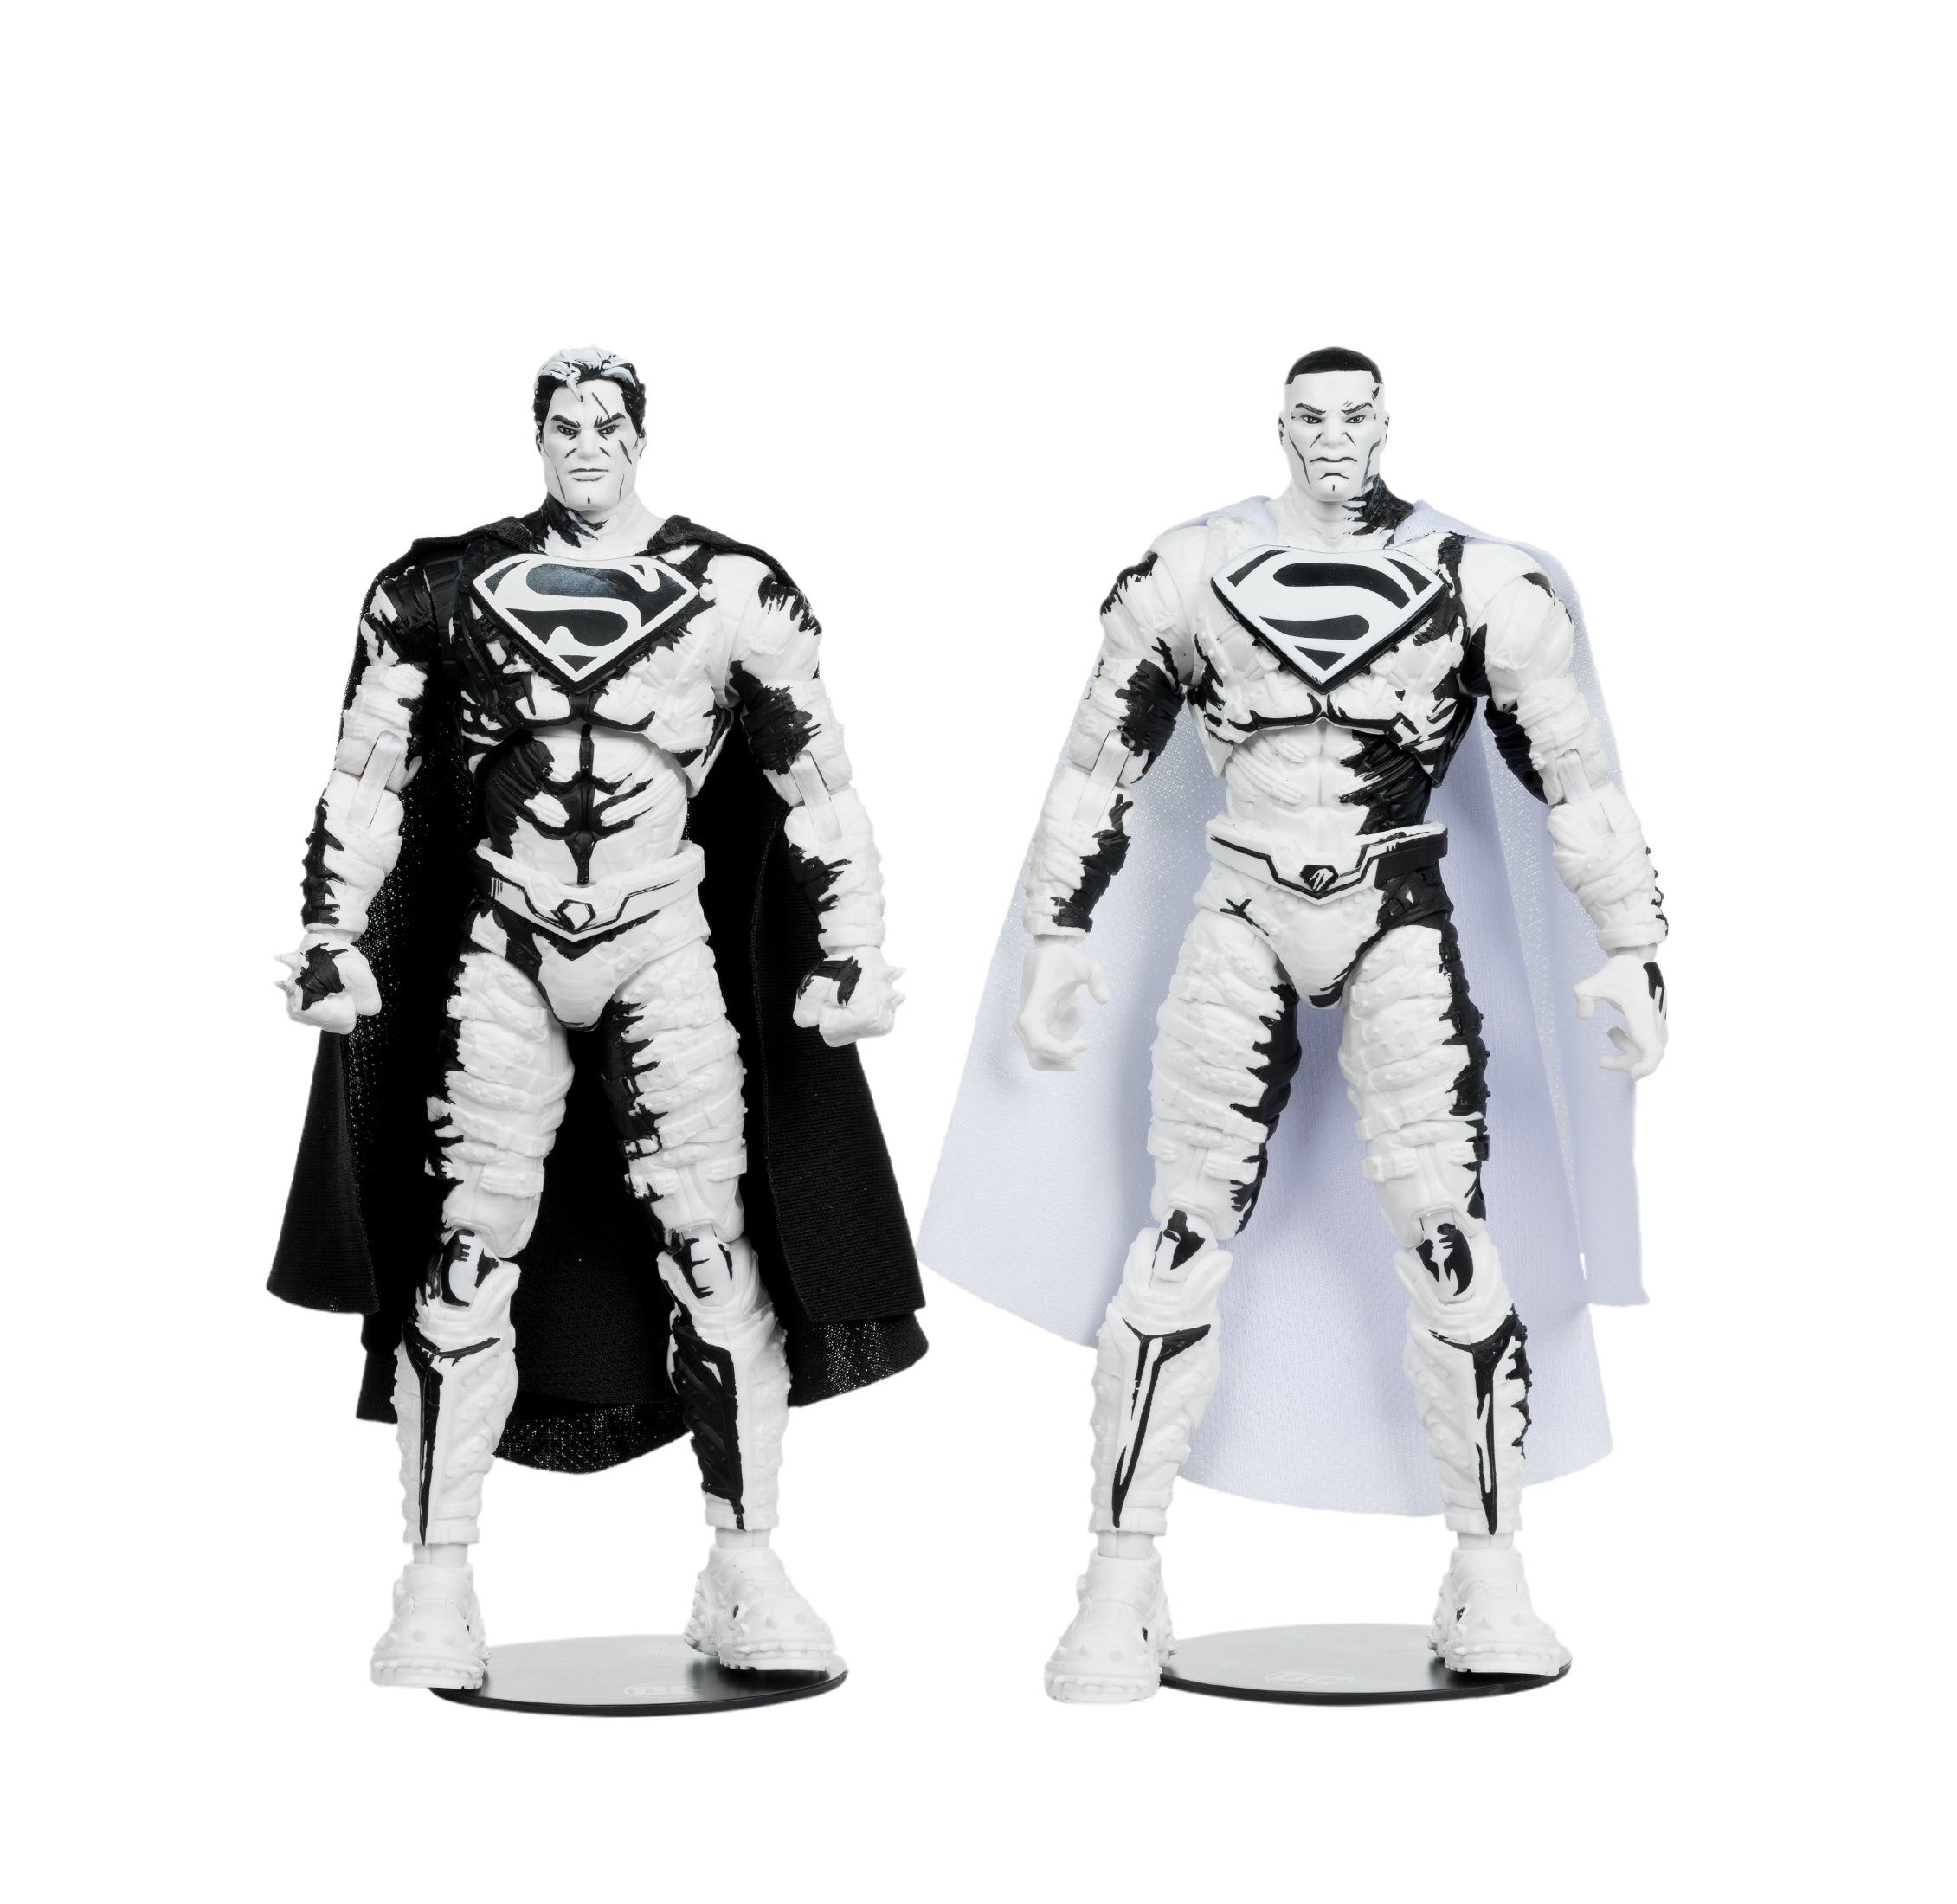 McFarlane Sketch: DC Comics - Superman Ghost of Krypton Gold Label 7 Pulgadas 4 Pack con Comic